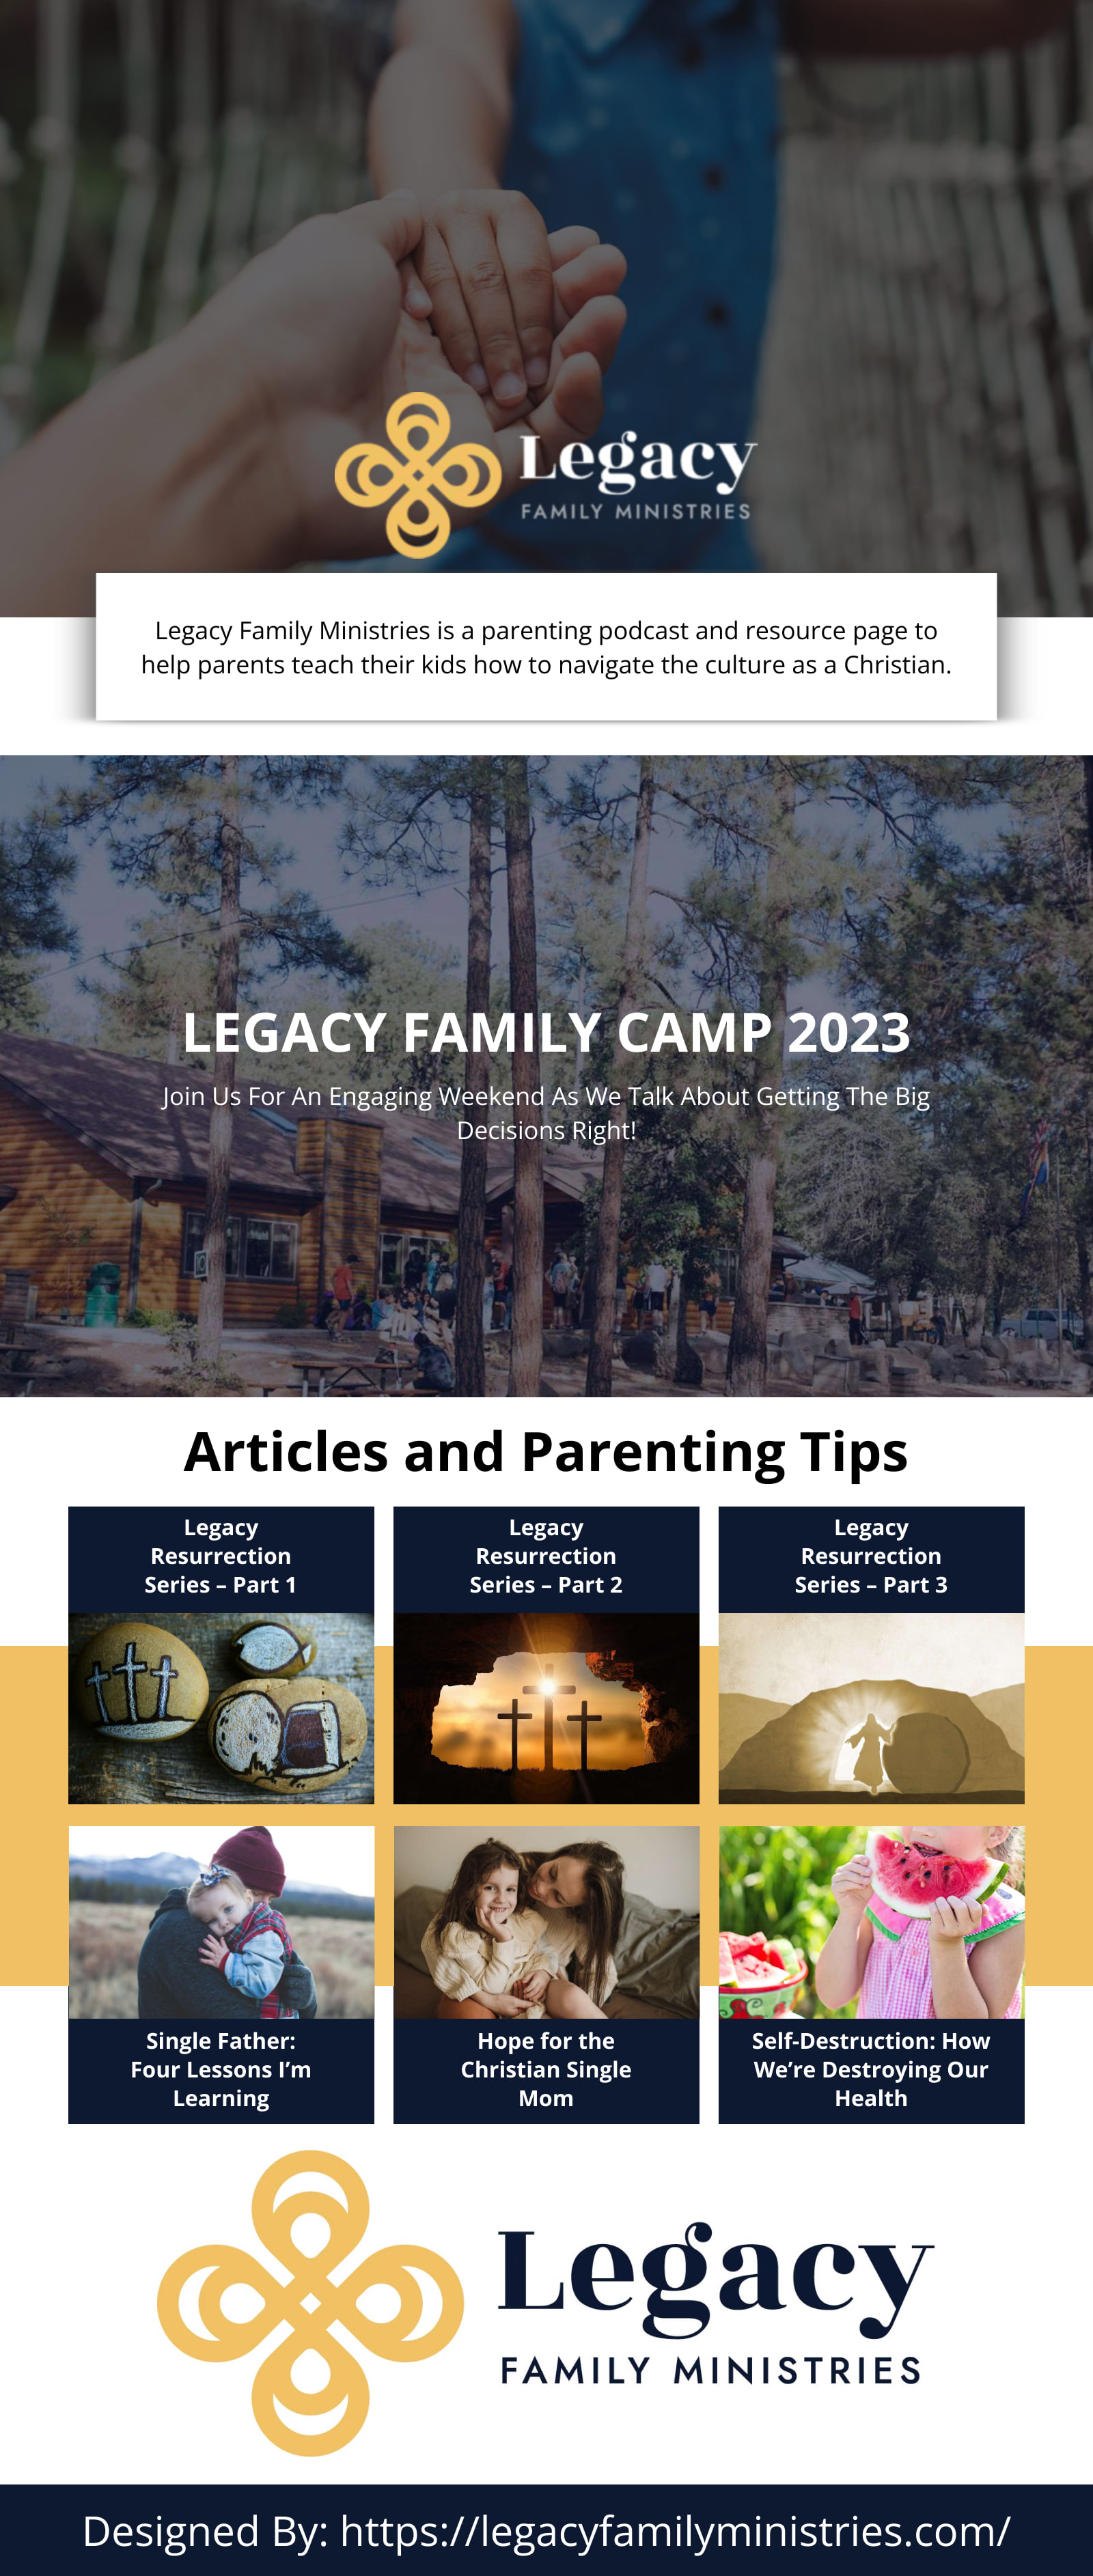 Legacy-Family-Ministries-legacyfamilyministries-com.jpg